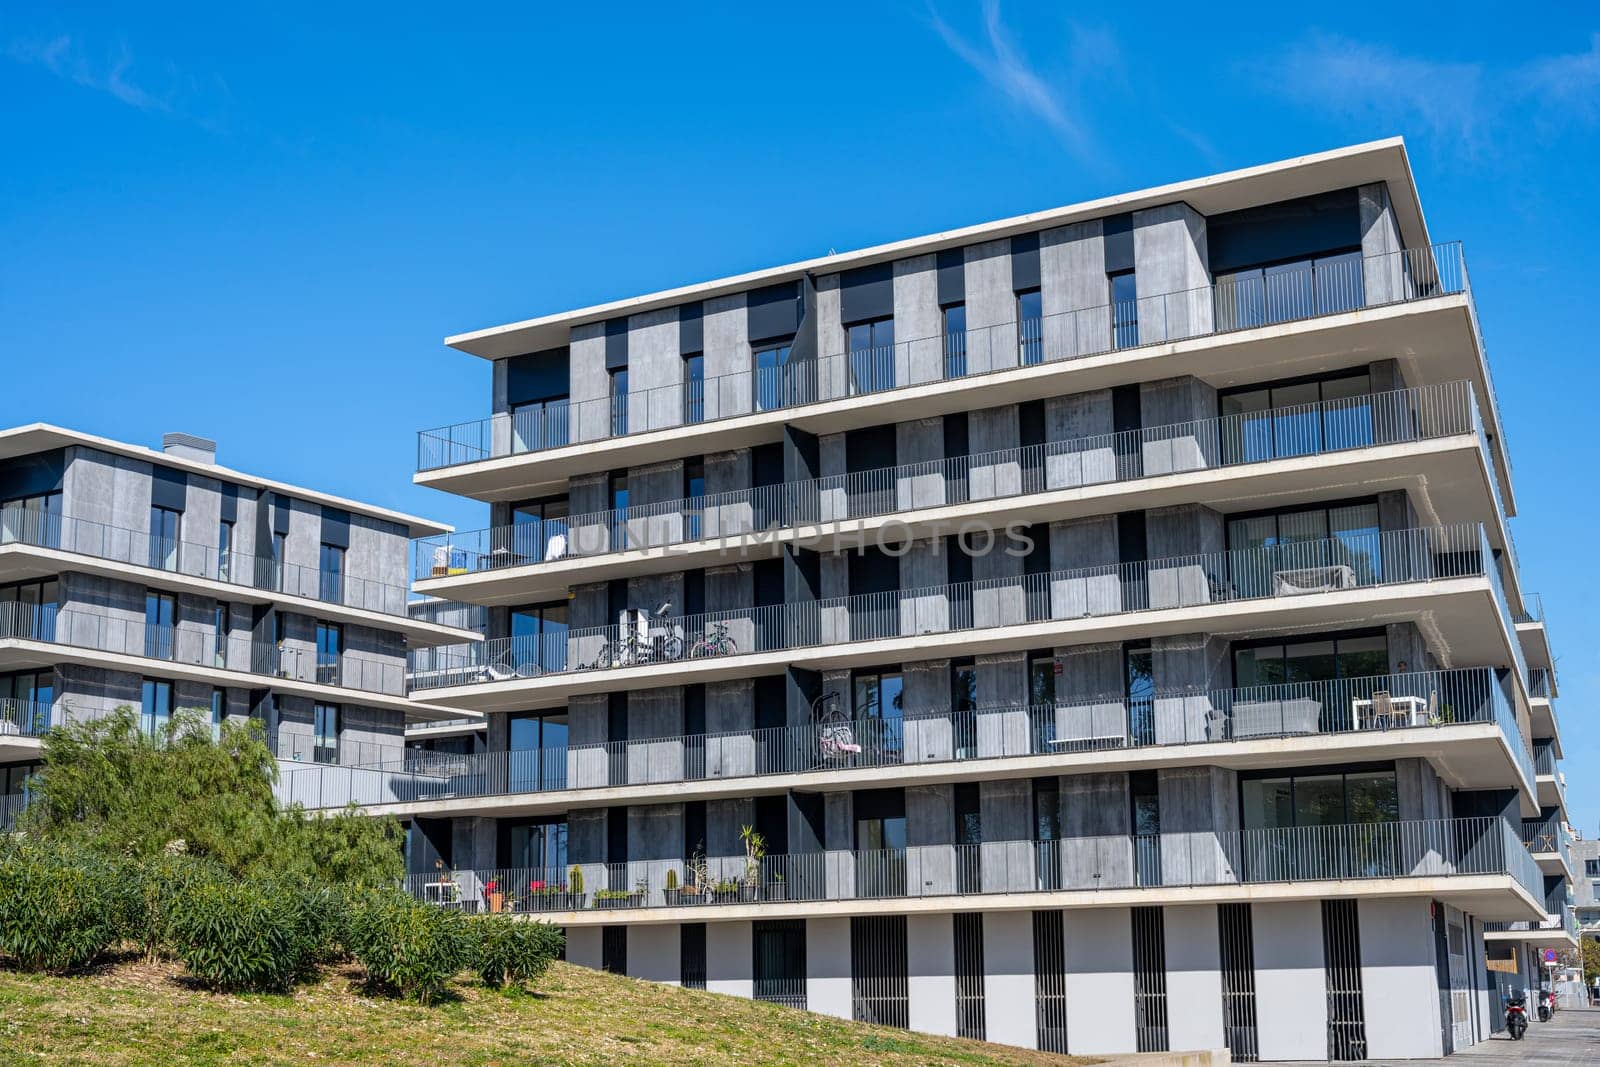 New apartment buildings in a housing development area in Badalona, Spain